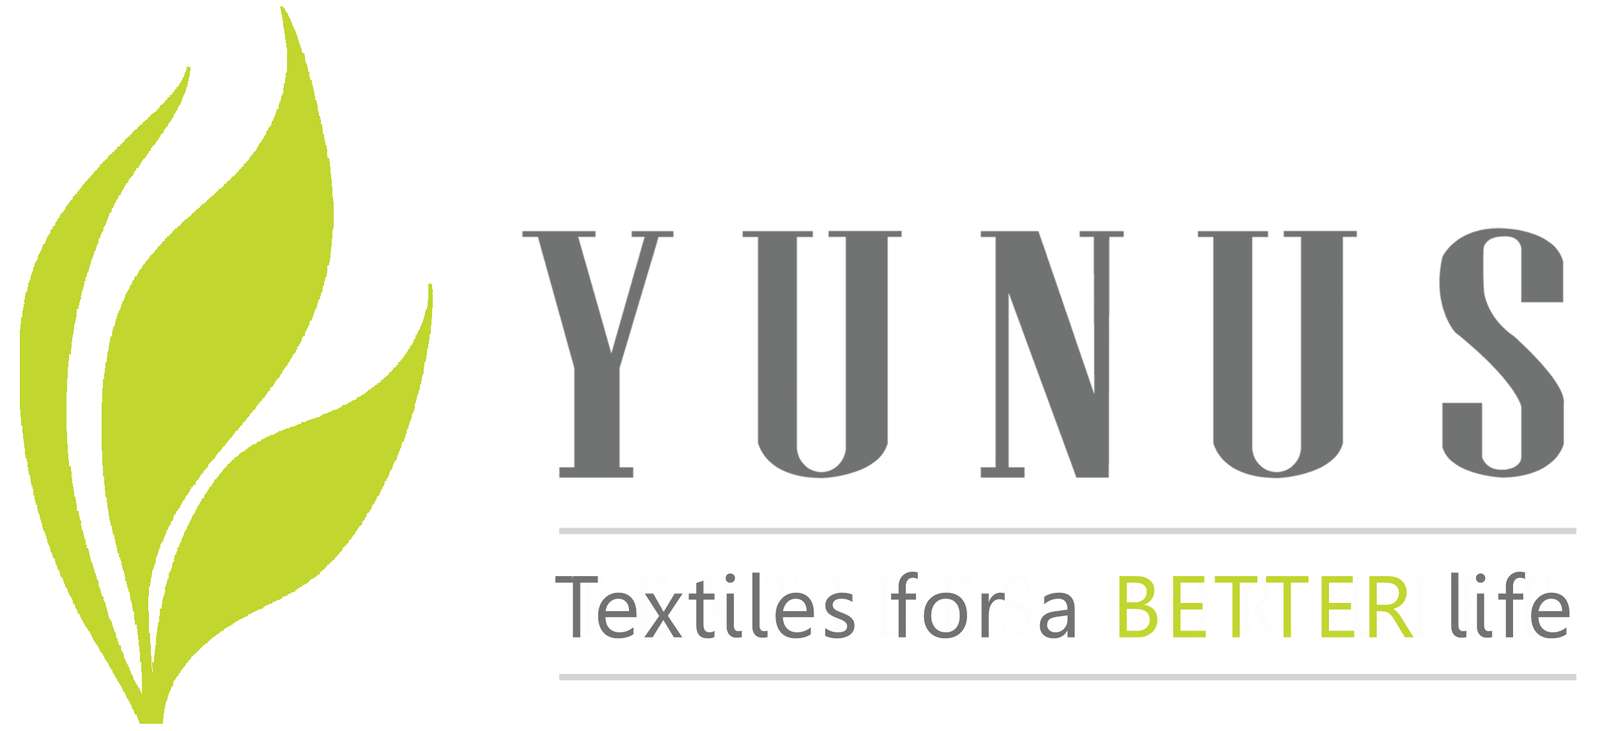 YTML Logo puzzle online from photo